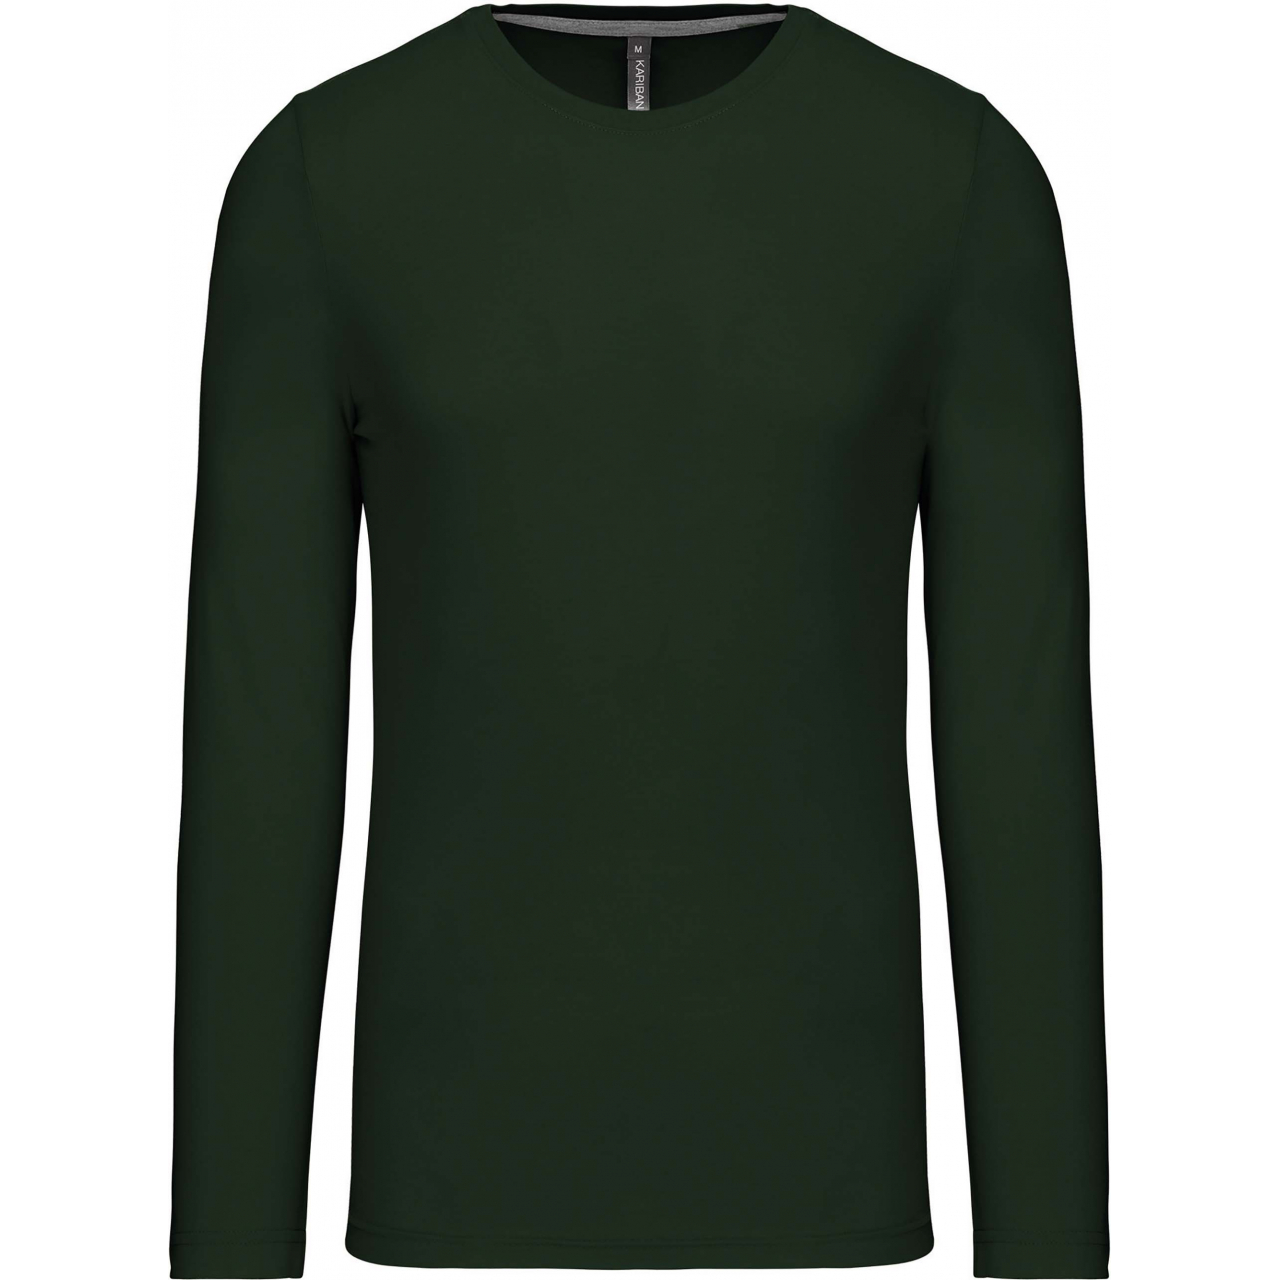 Pánské tričko Kariban dlouhý rukáv - tmavě zelené, XL